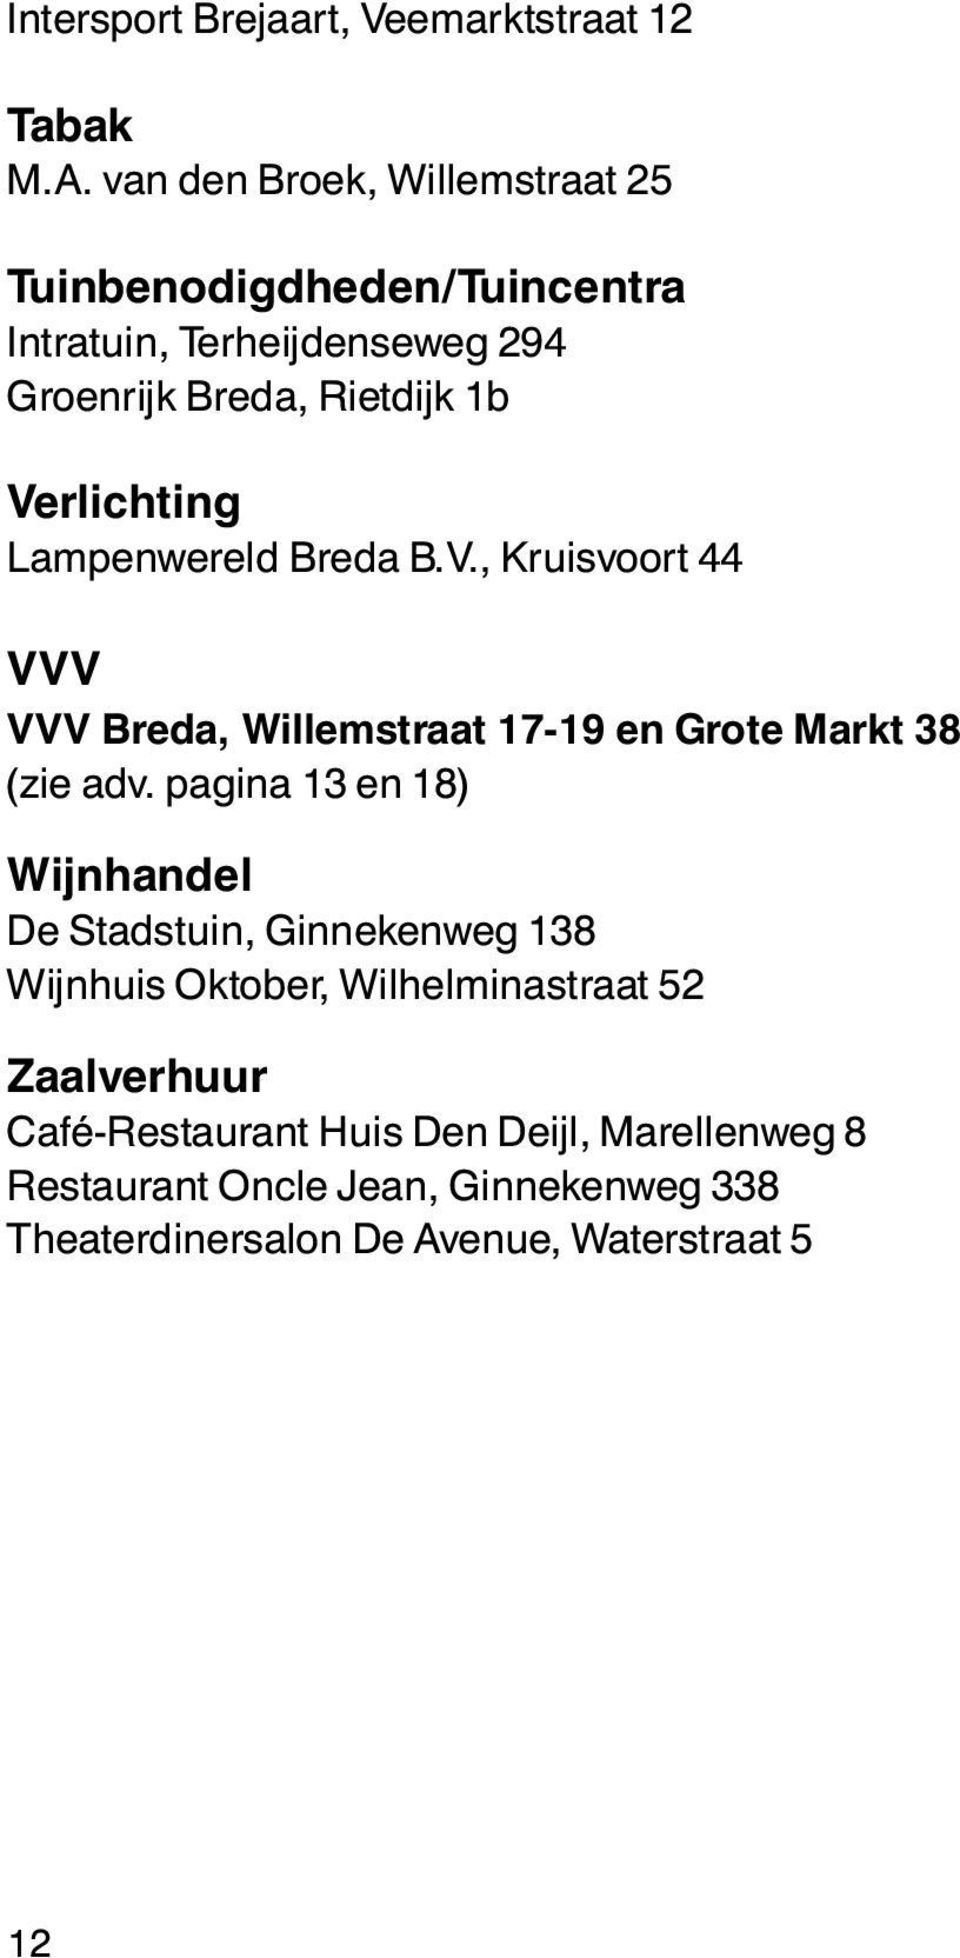 Verlichting Lampenwereld Breda B.V., Kruisvoort 44 VVV VVV Breda, Willemstraat 17-19 en Grote Markt 38 (zie adv.